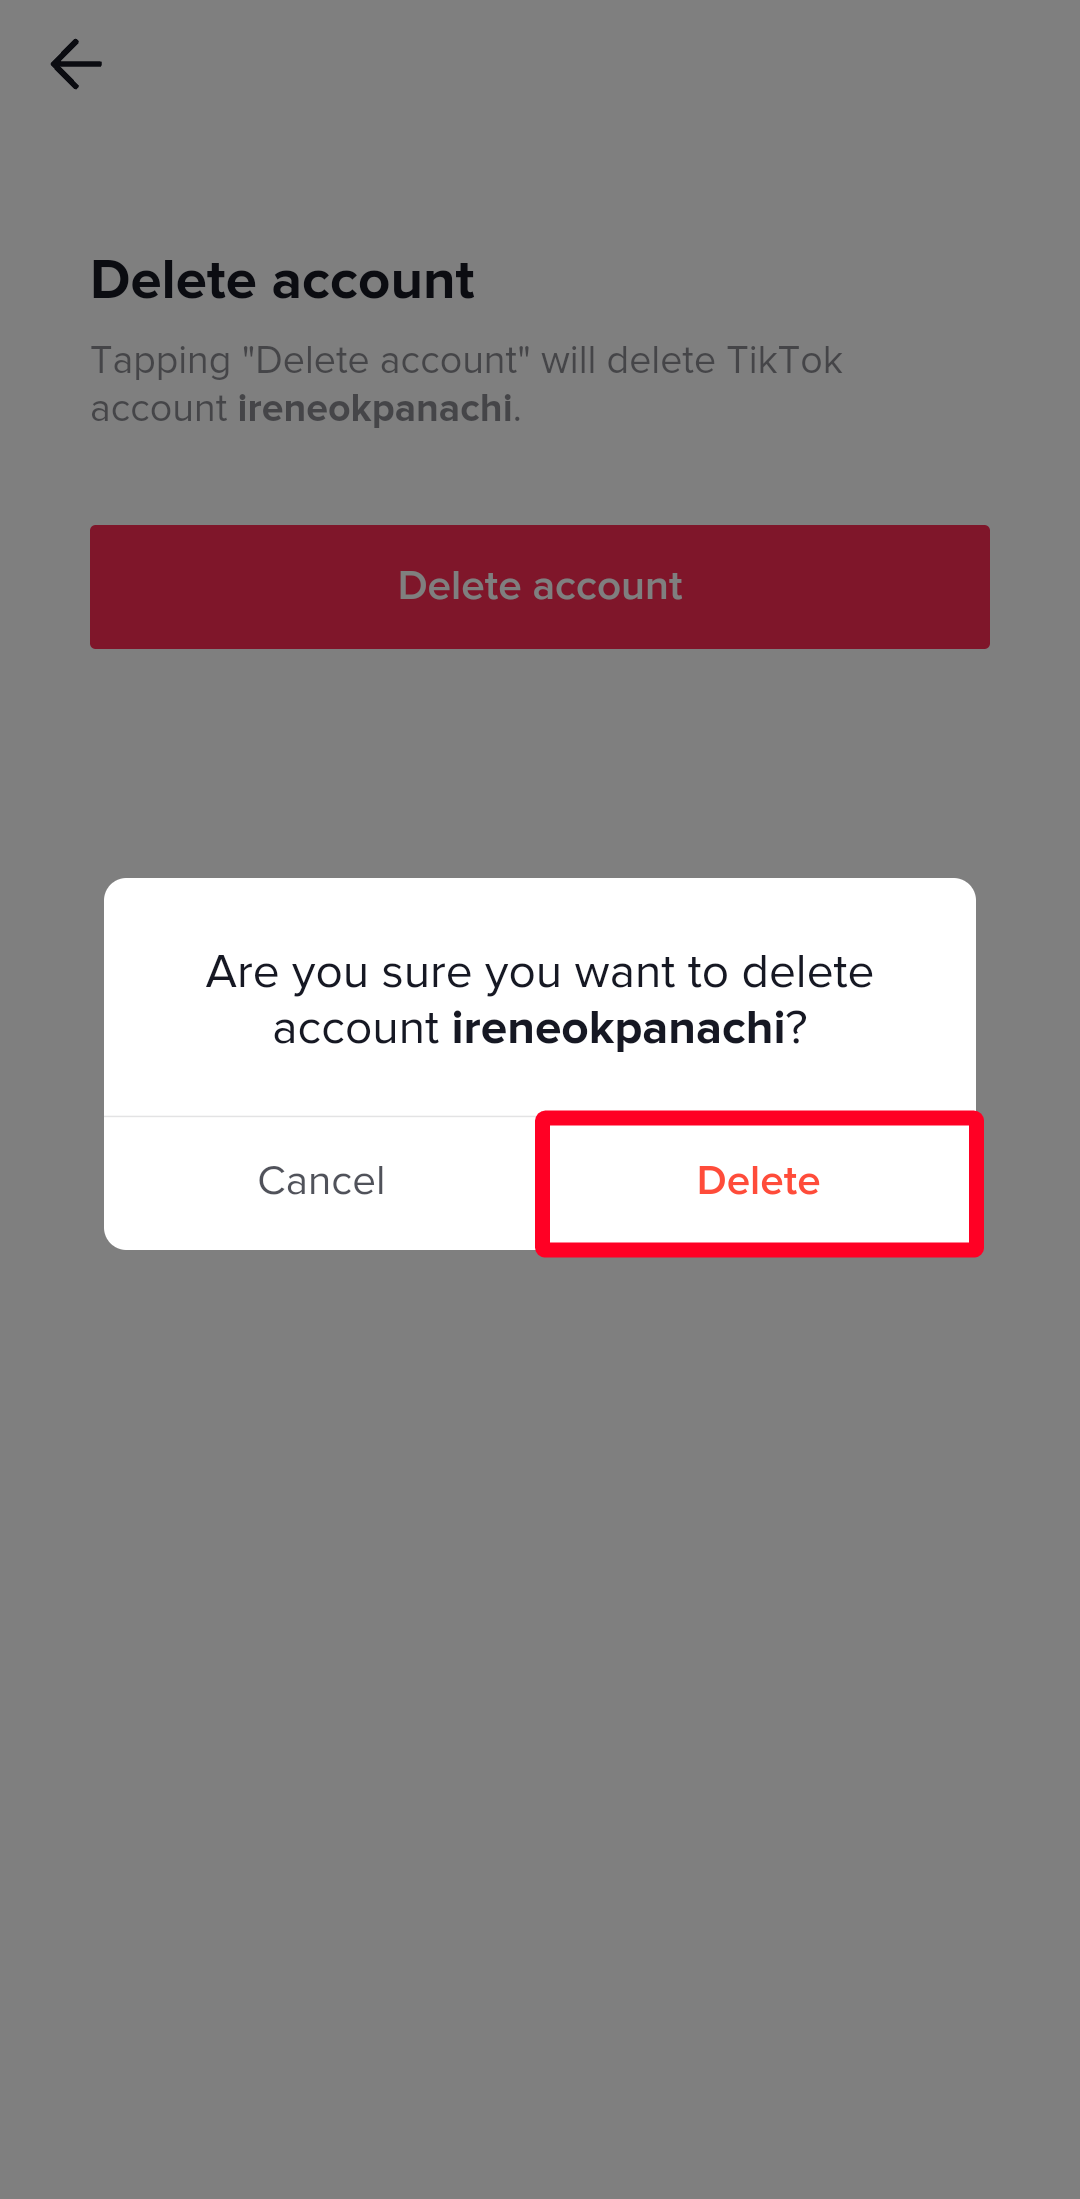 Delete-account-confirmation-tab-on-TikTok-app